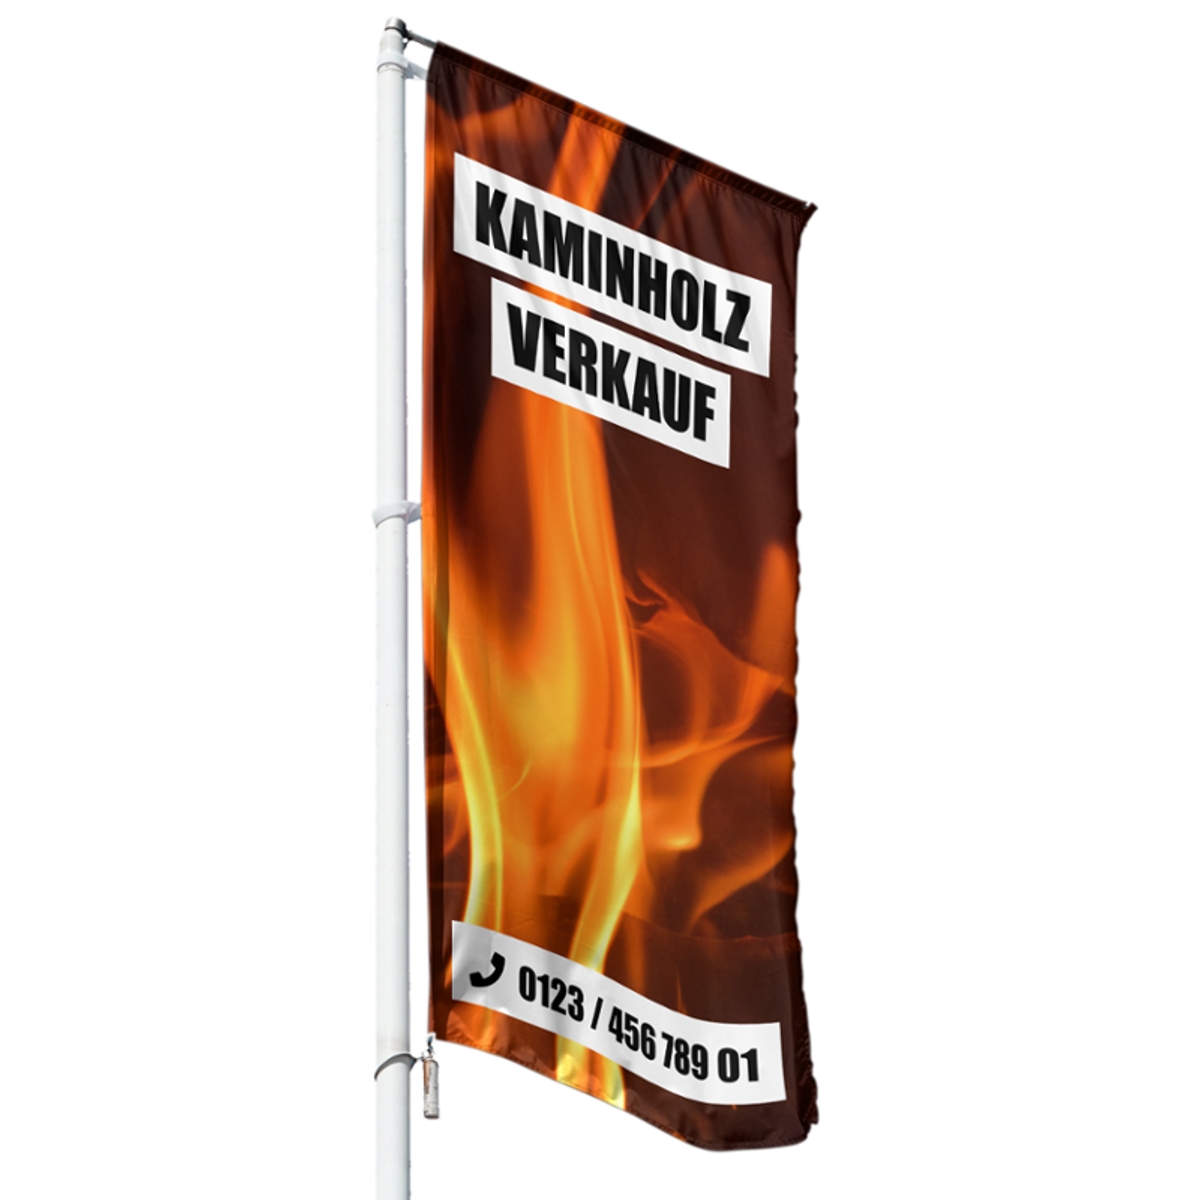 Kaminholz Verkauf Hissflagge, Fahne im Wunschformat (2315)